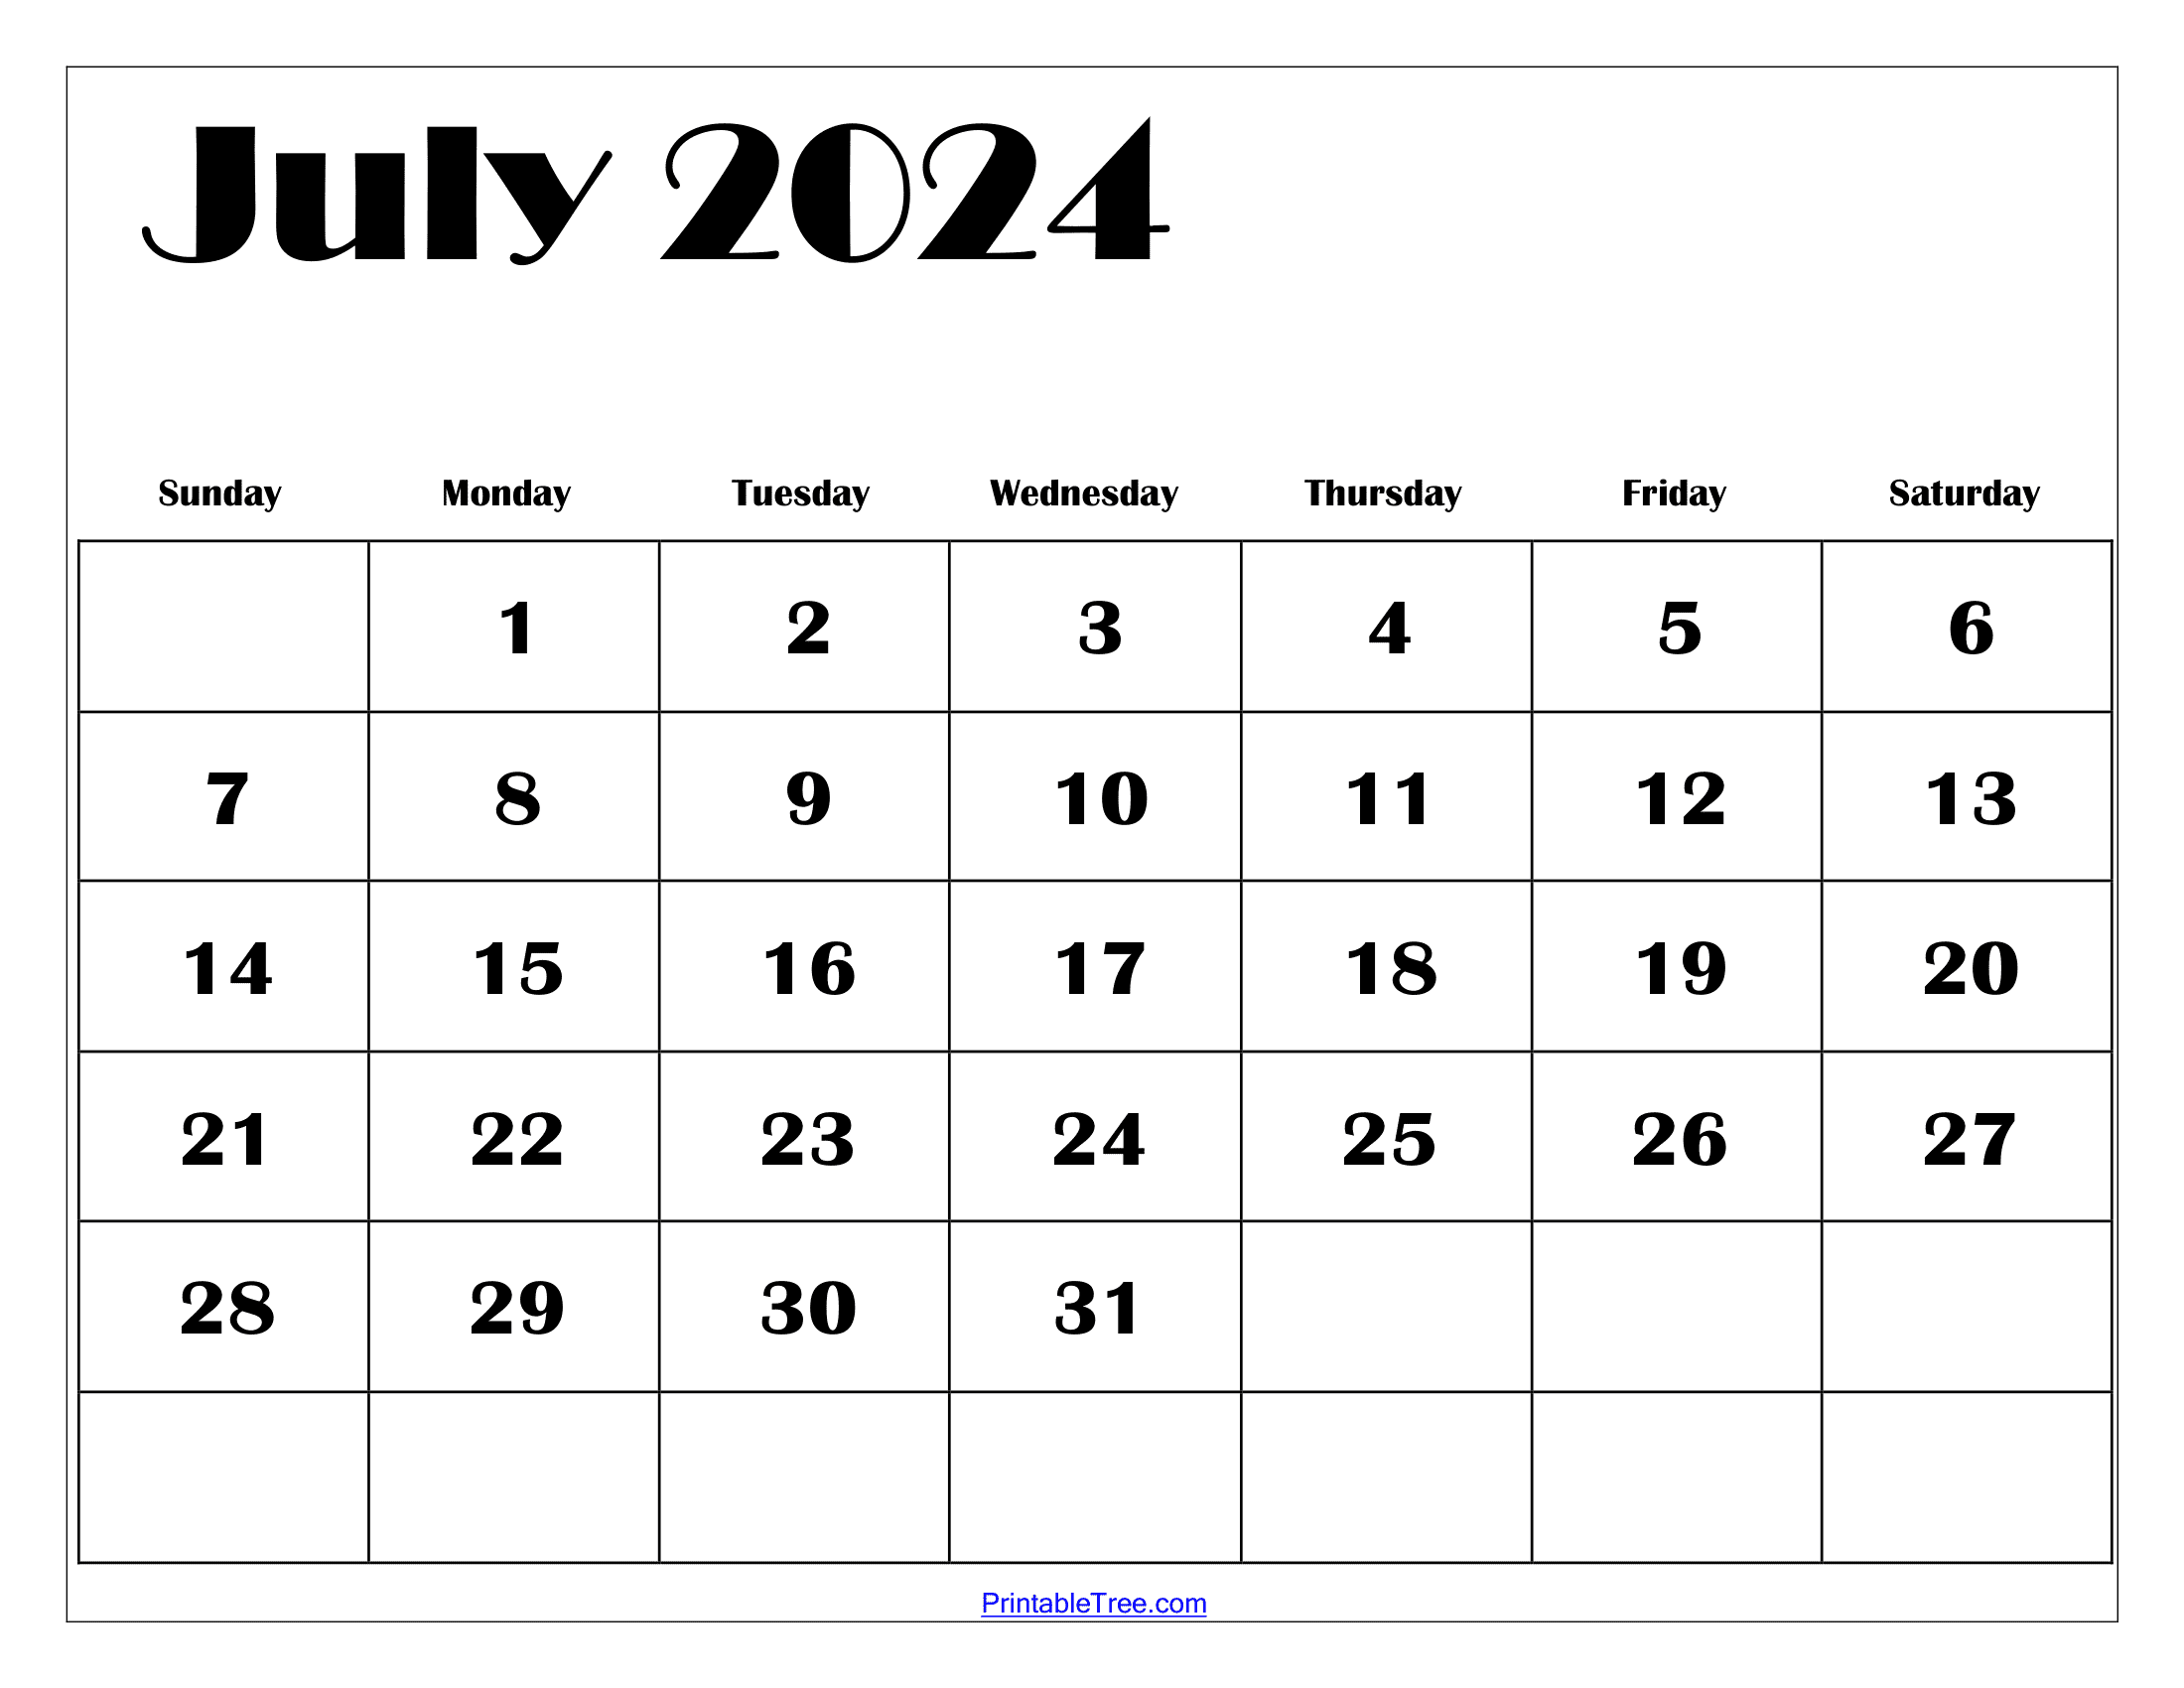 July 2024 Calendar Printable Pdf With Holidays Free Template for July Printable Calendar 2024